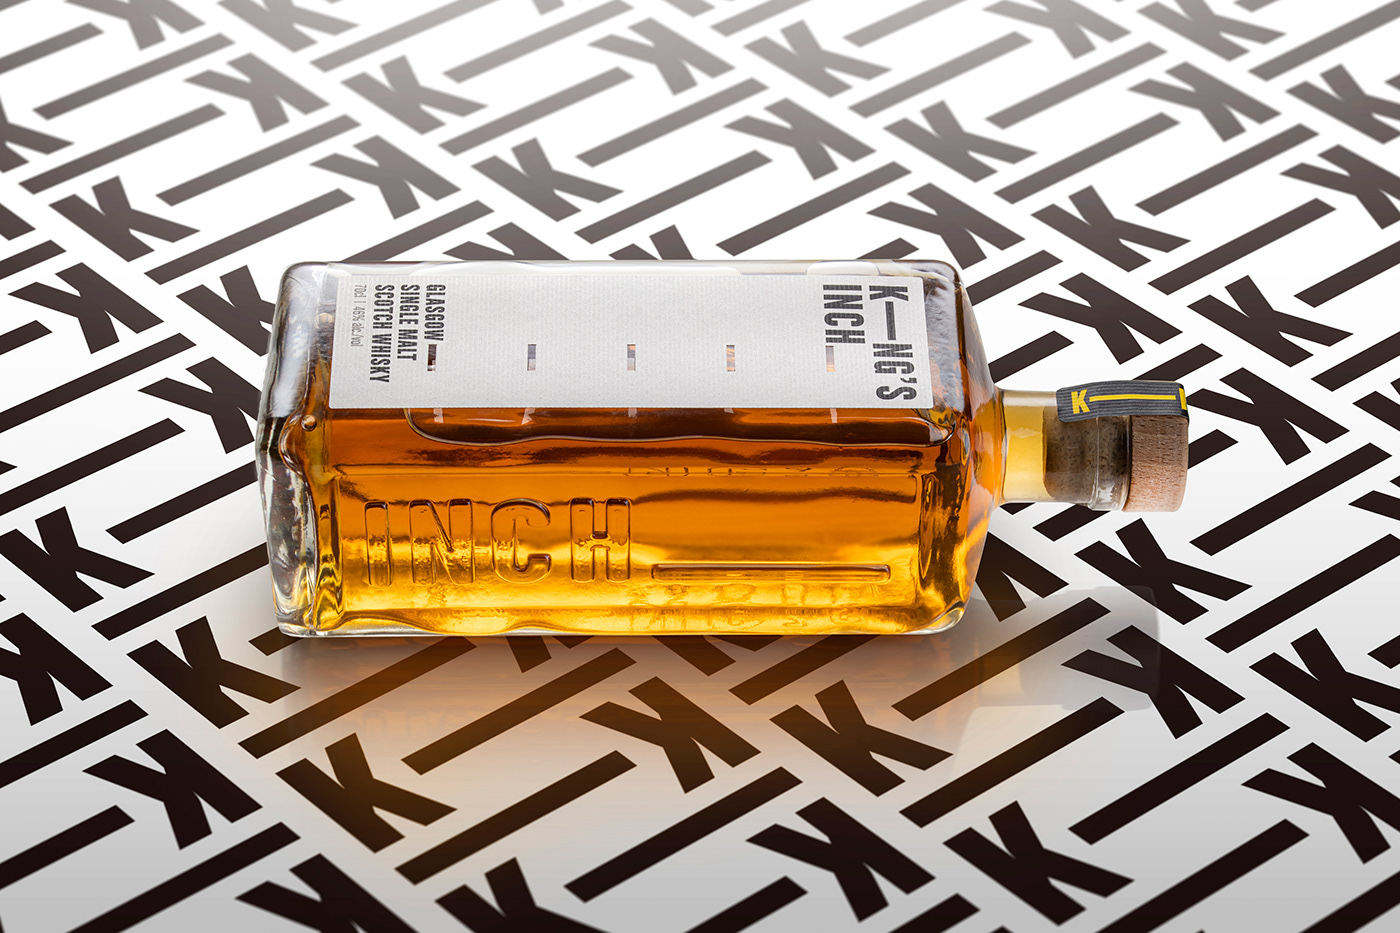 Packaging packaging design brand identity design graphic design  Whisky bottle design bottle